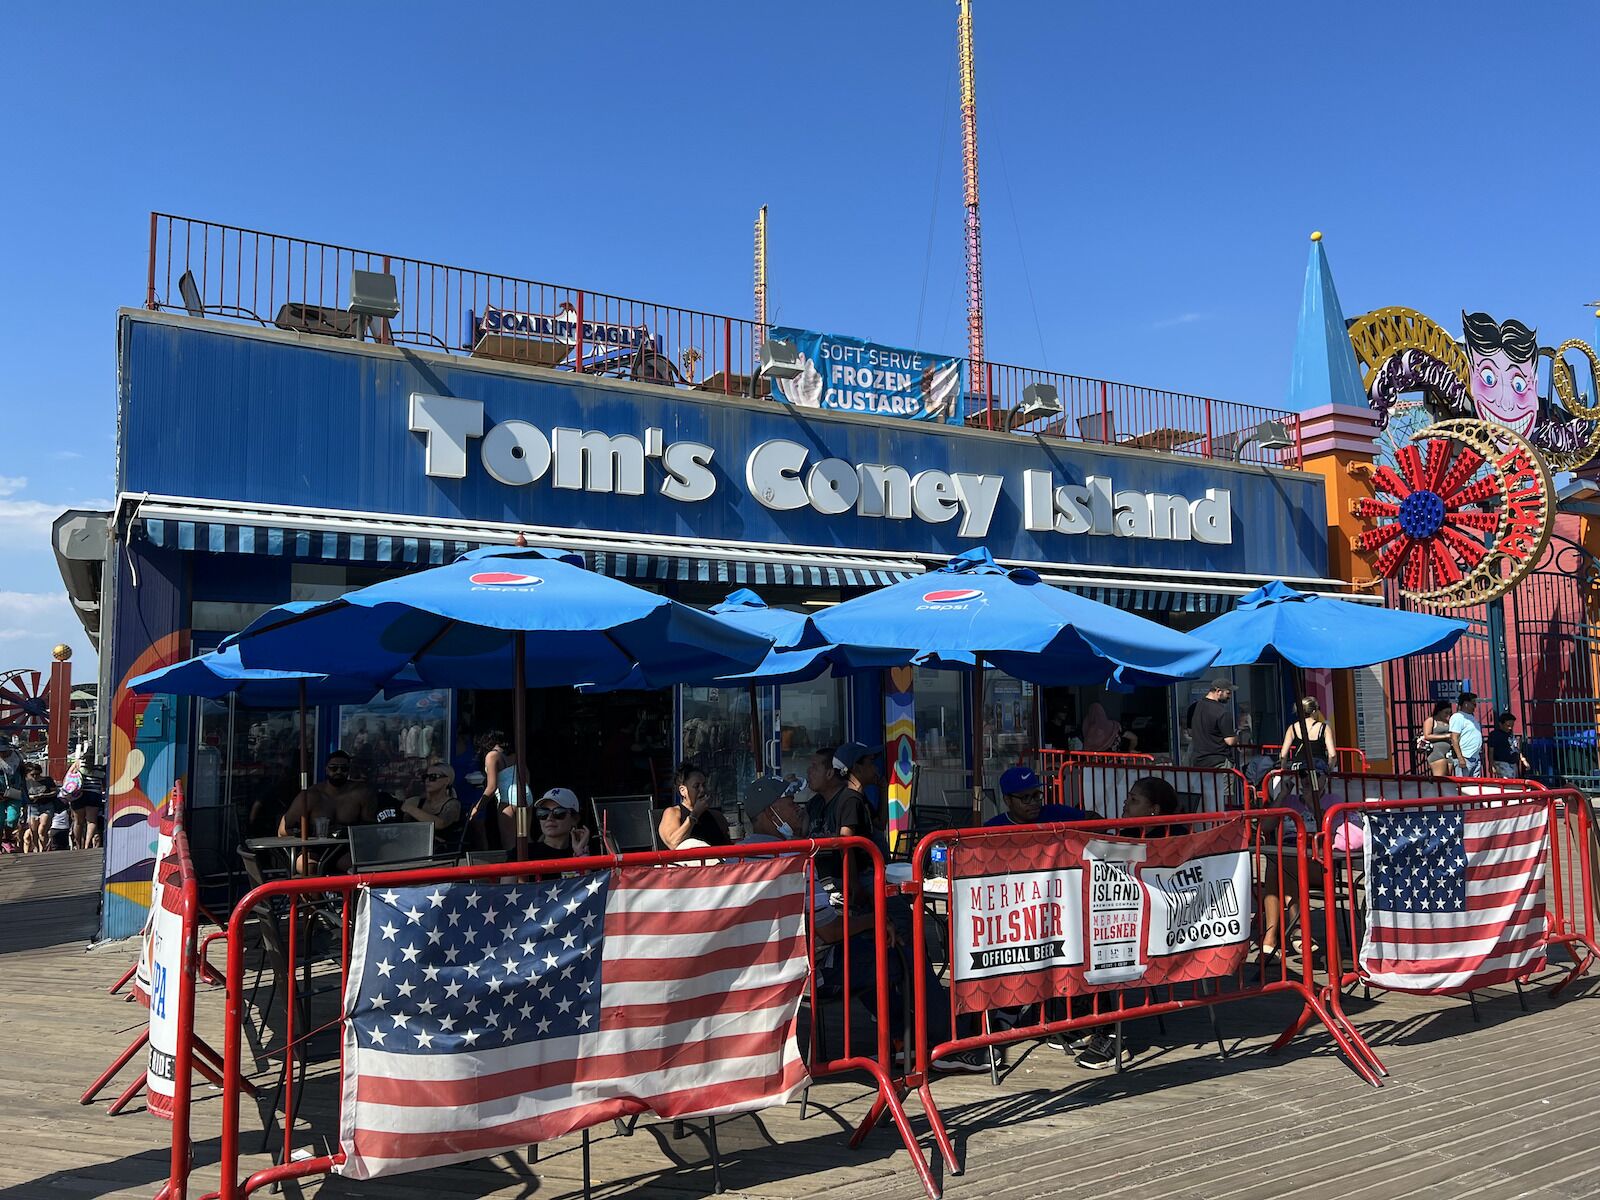 Tom's Coney Island exterior - coney island boardwalk